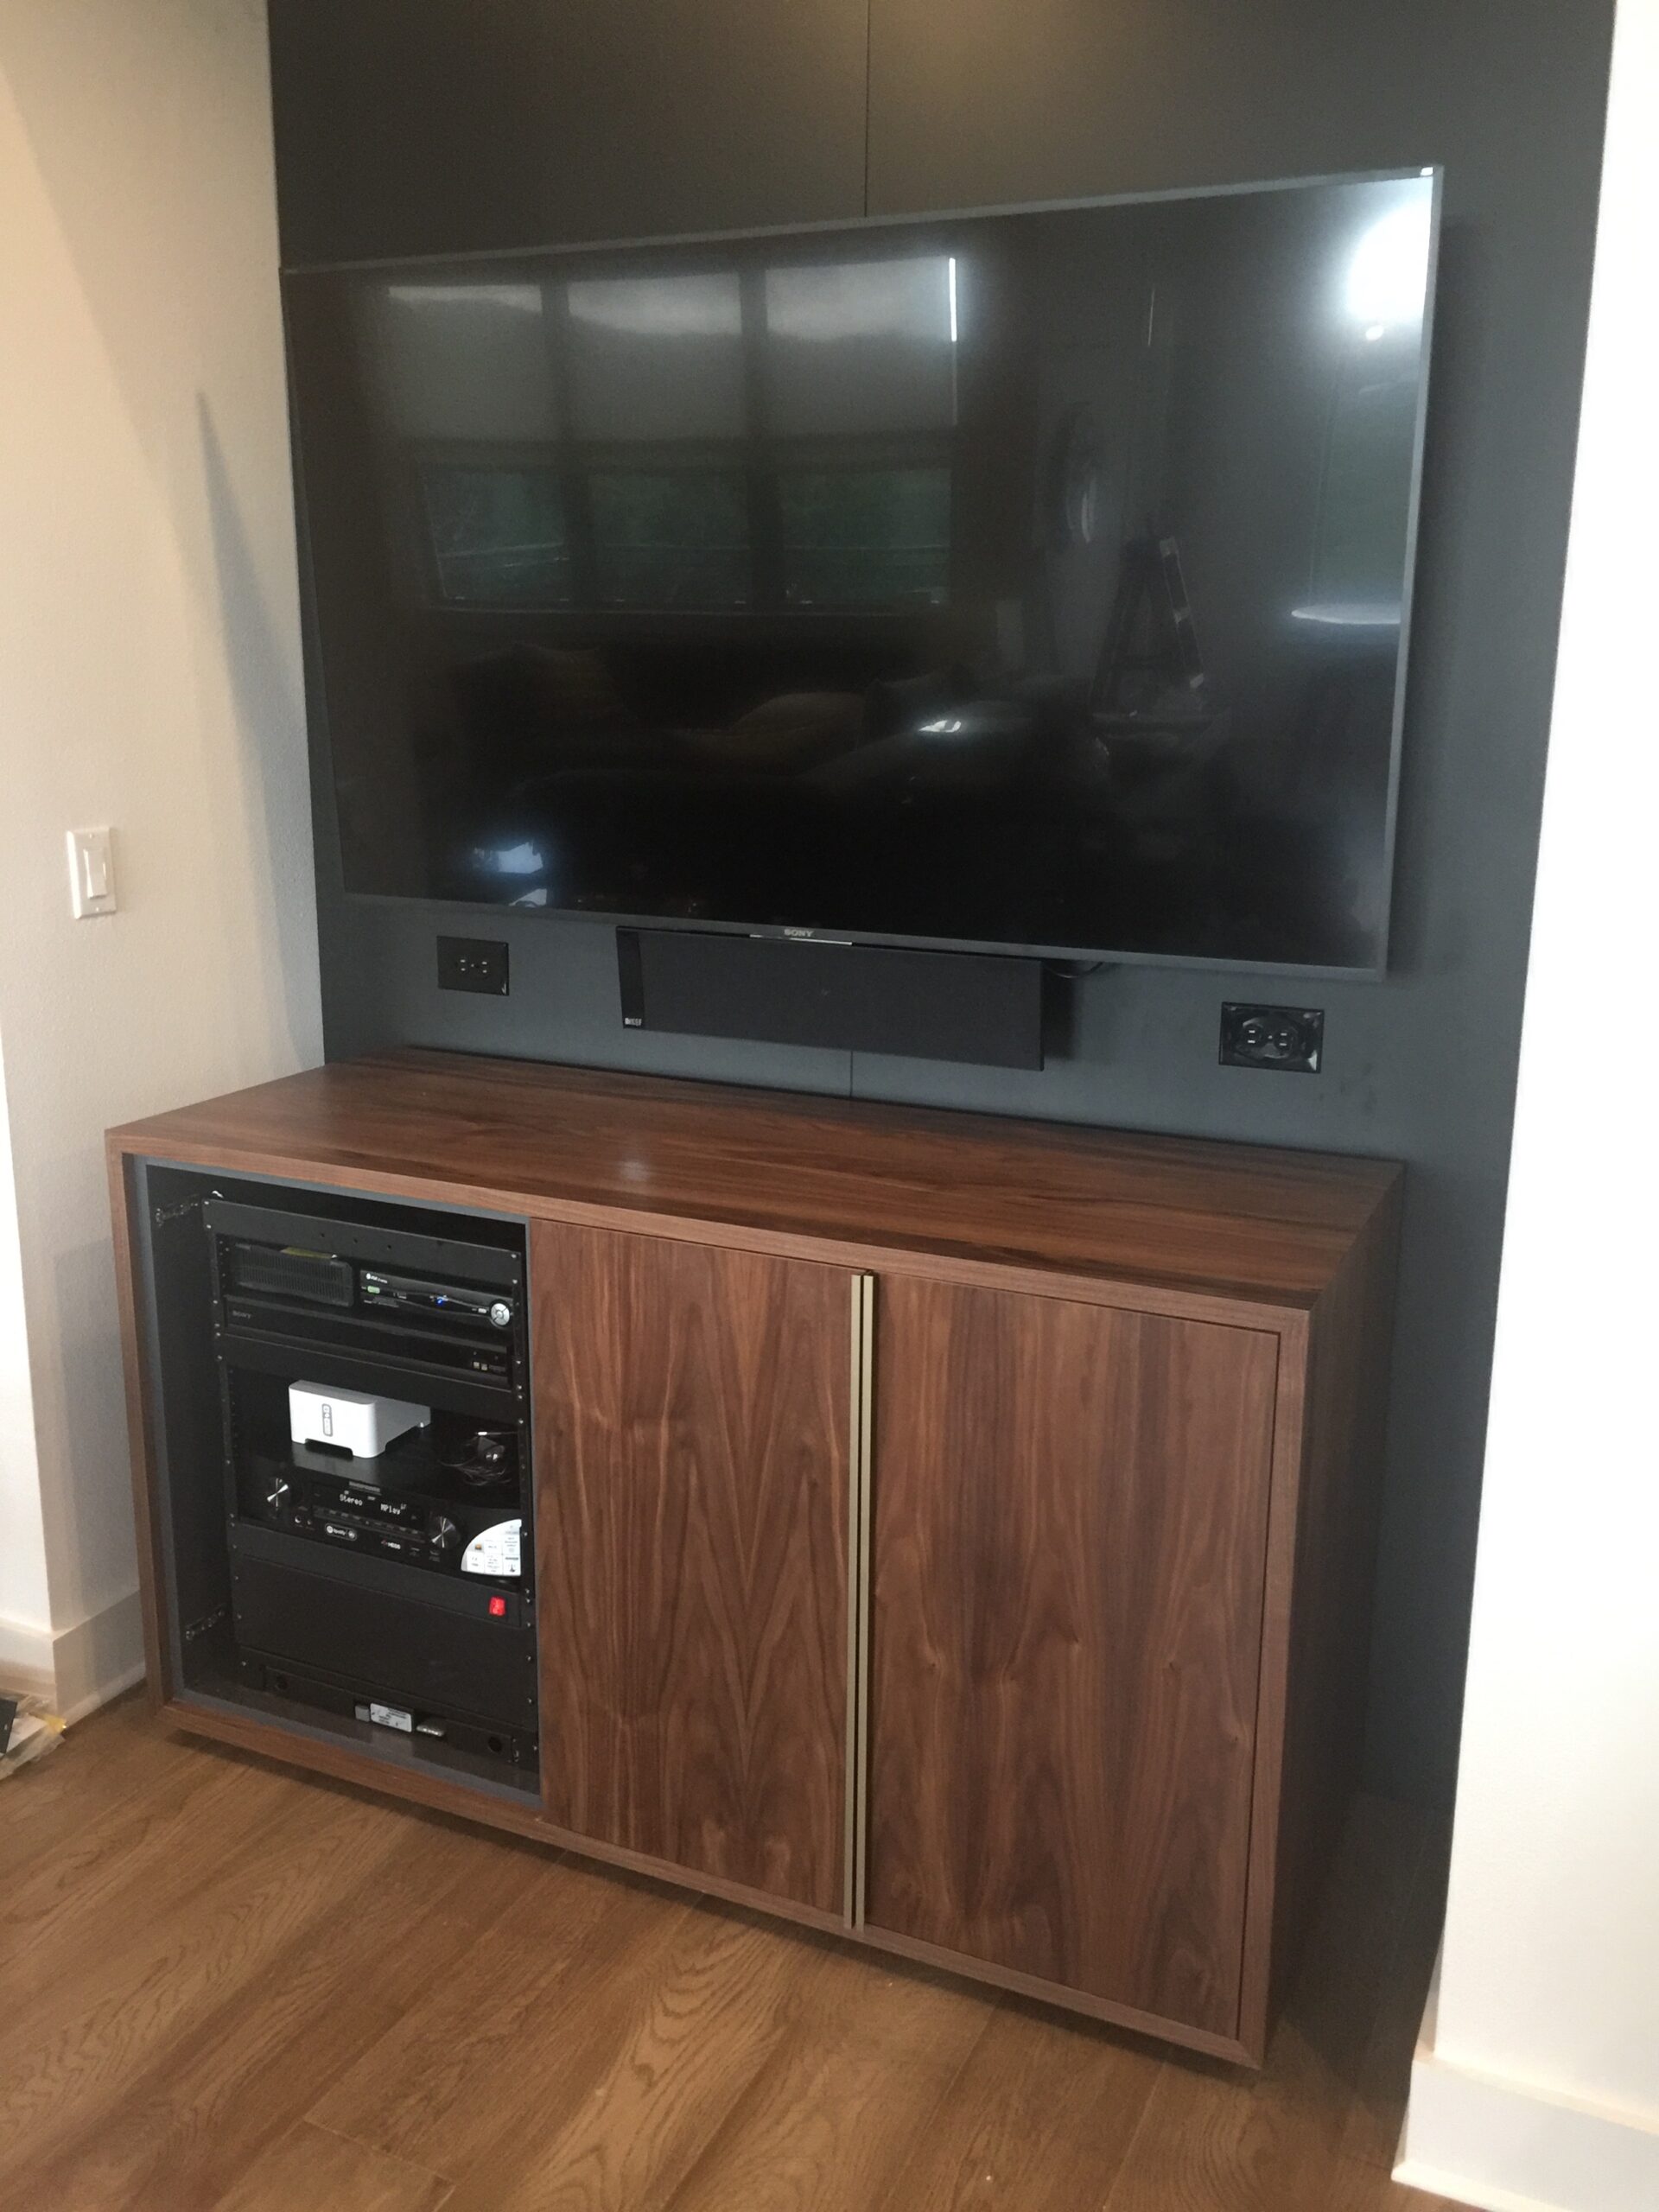 Flat screen mounted TV